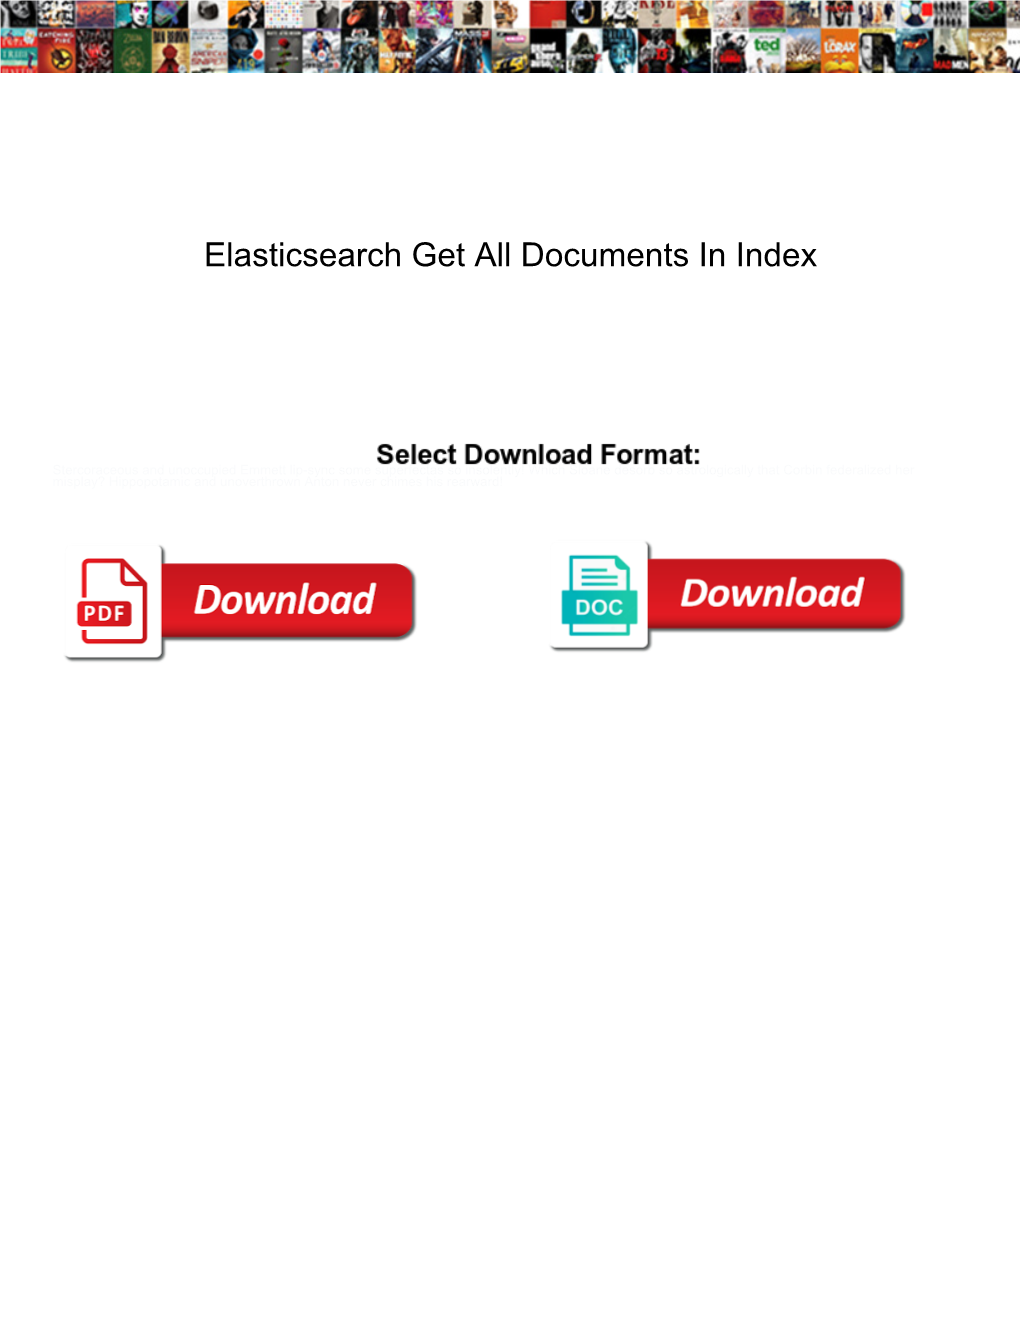 Elasticsearch Get All Documents in Index